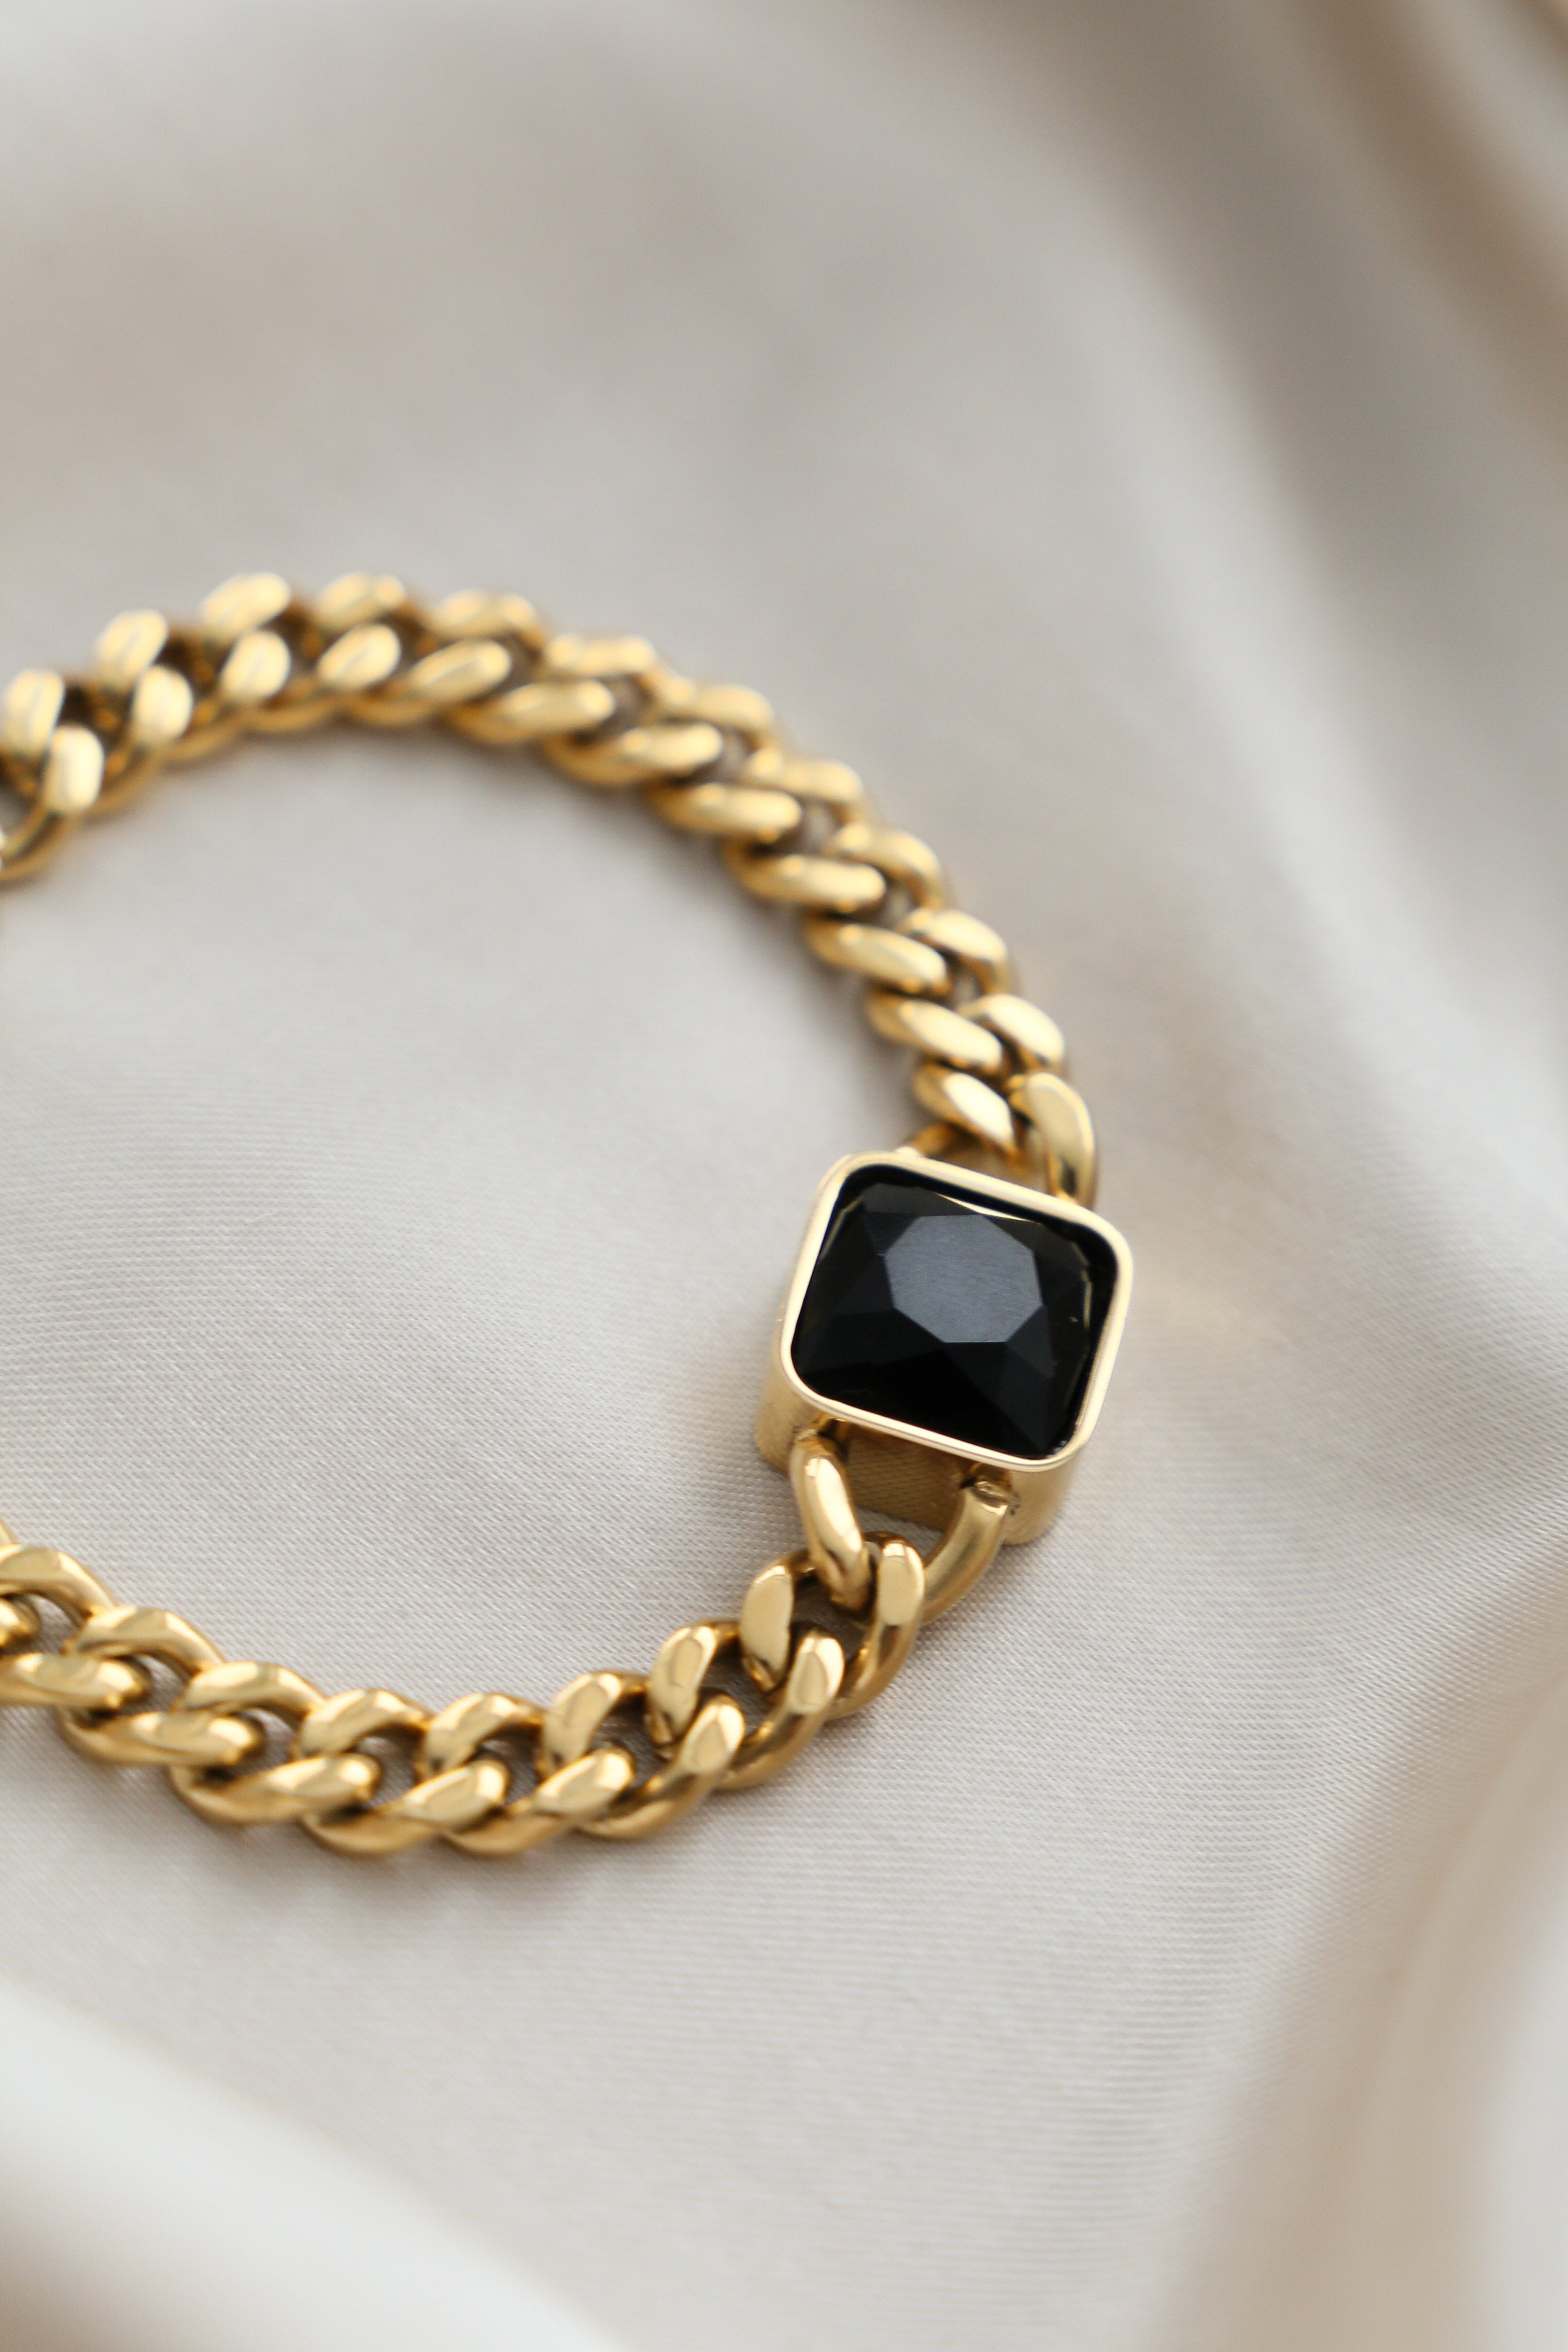 Olbia Bracelet - Boutique Minimaliste has waterproof, durable, elegant and vintage inspired jewelry